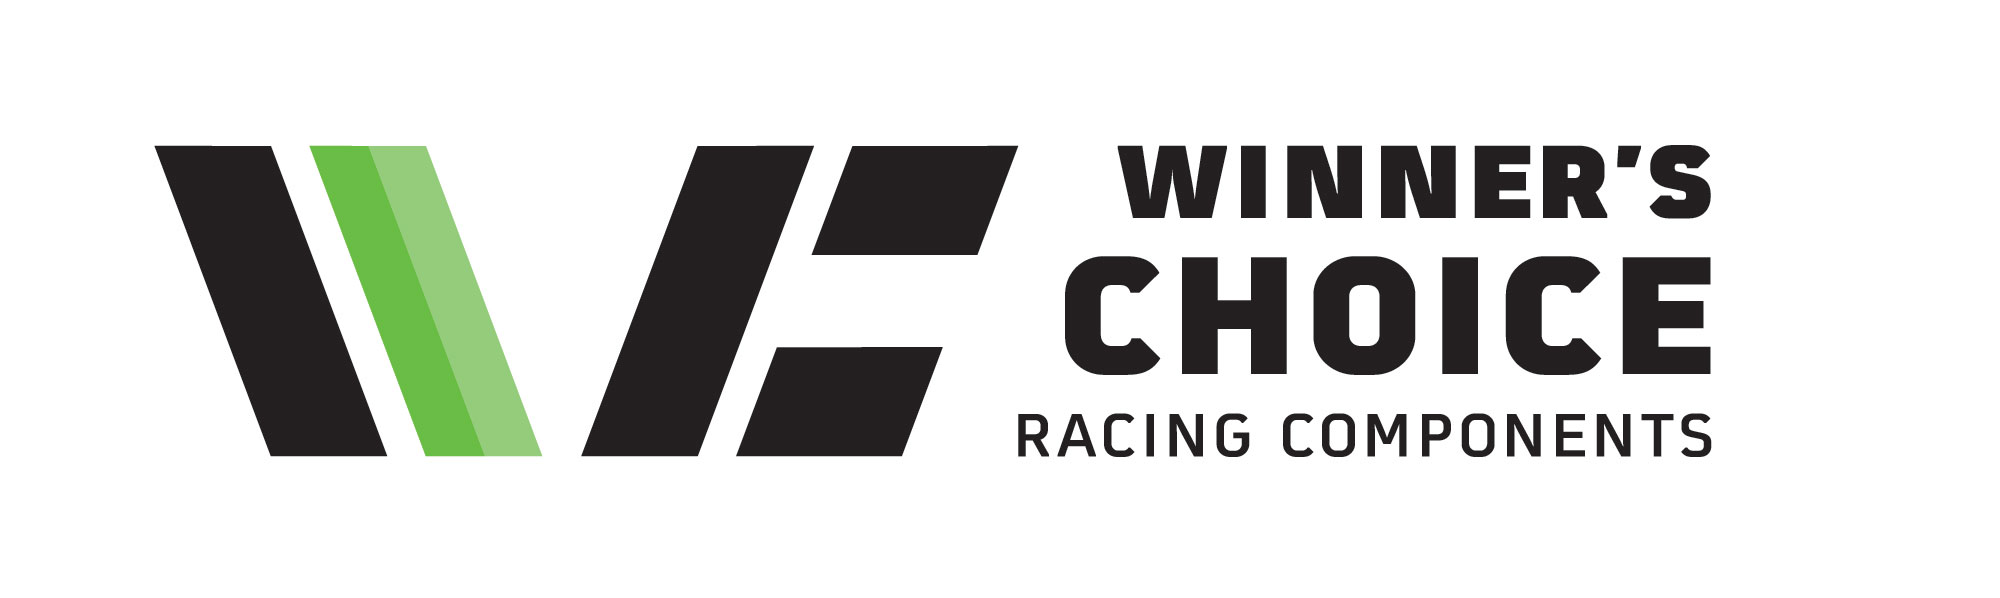 Winner's Choice Racing Components logo